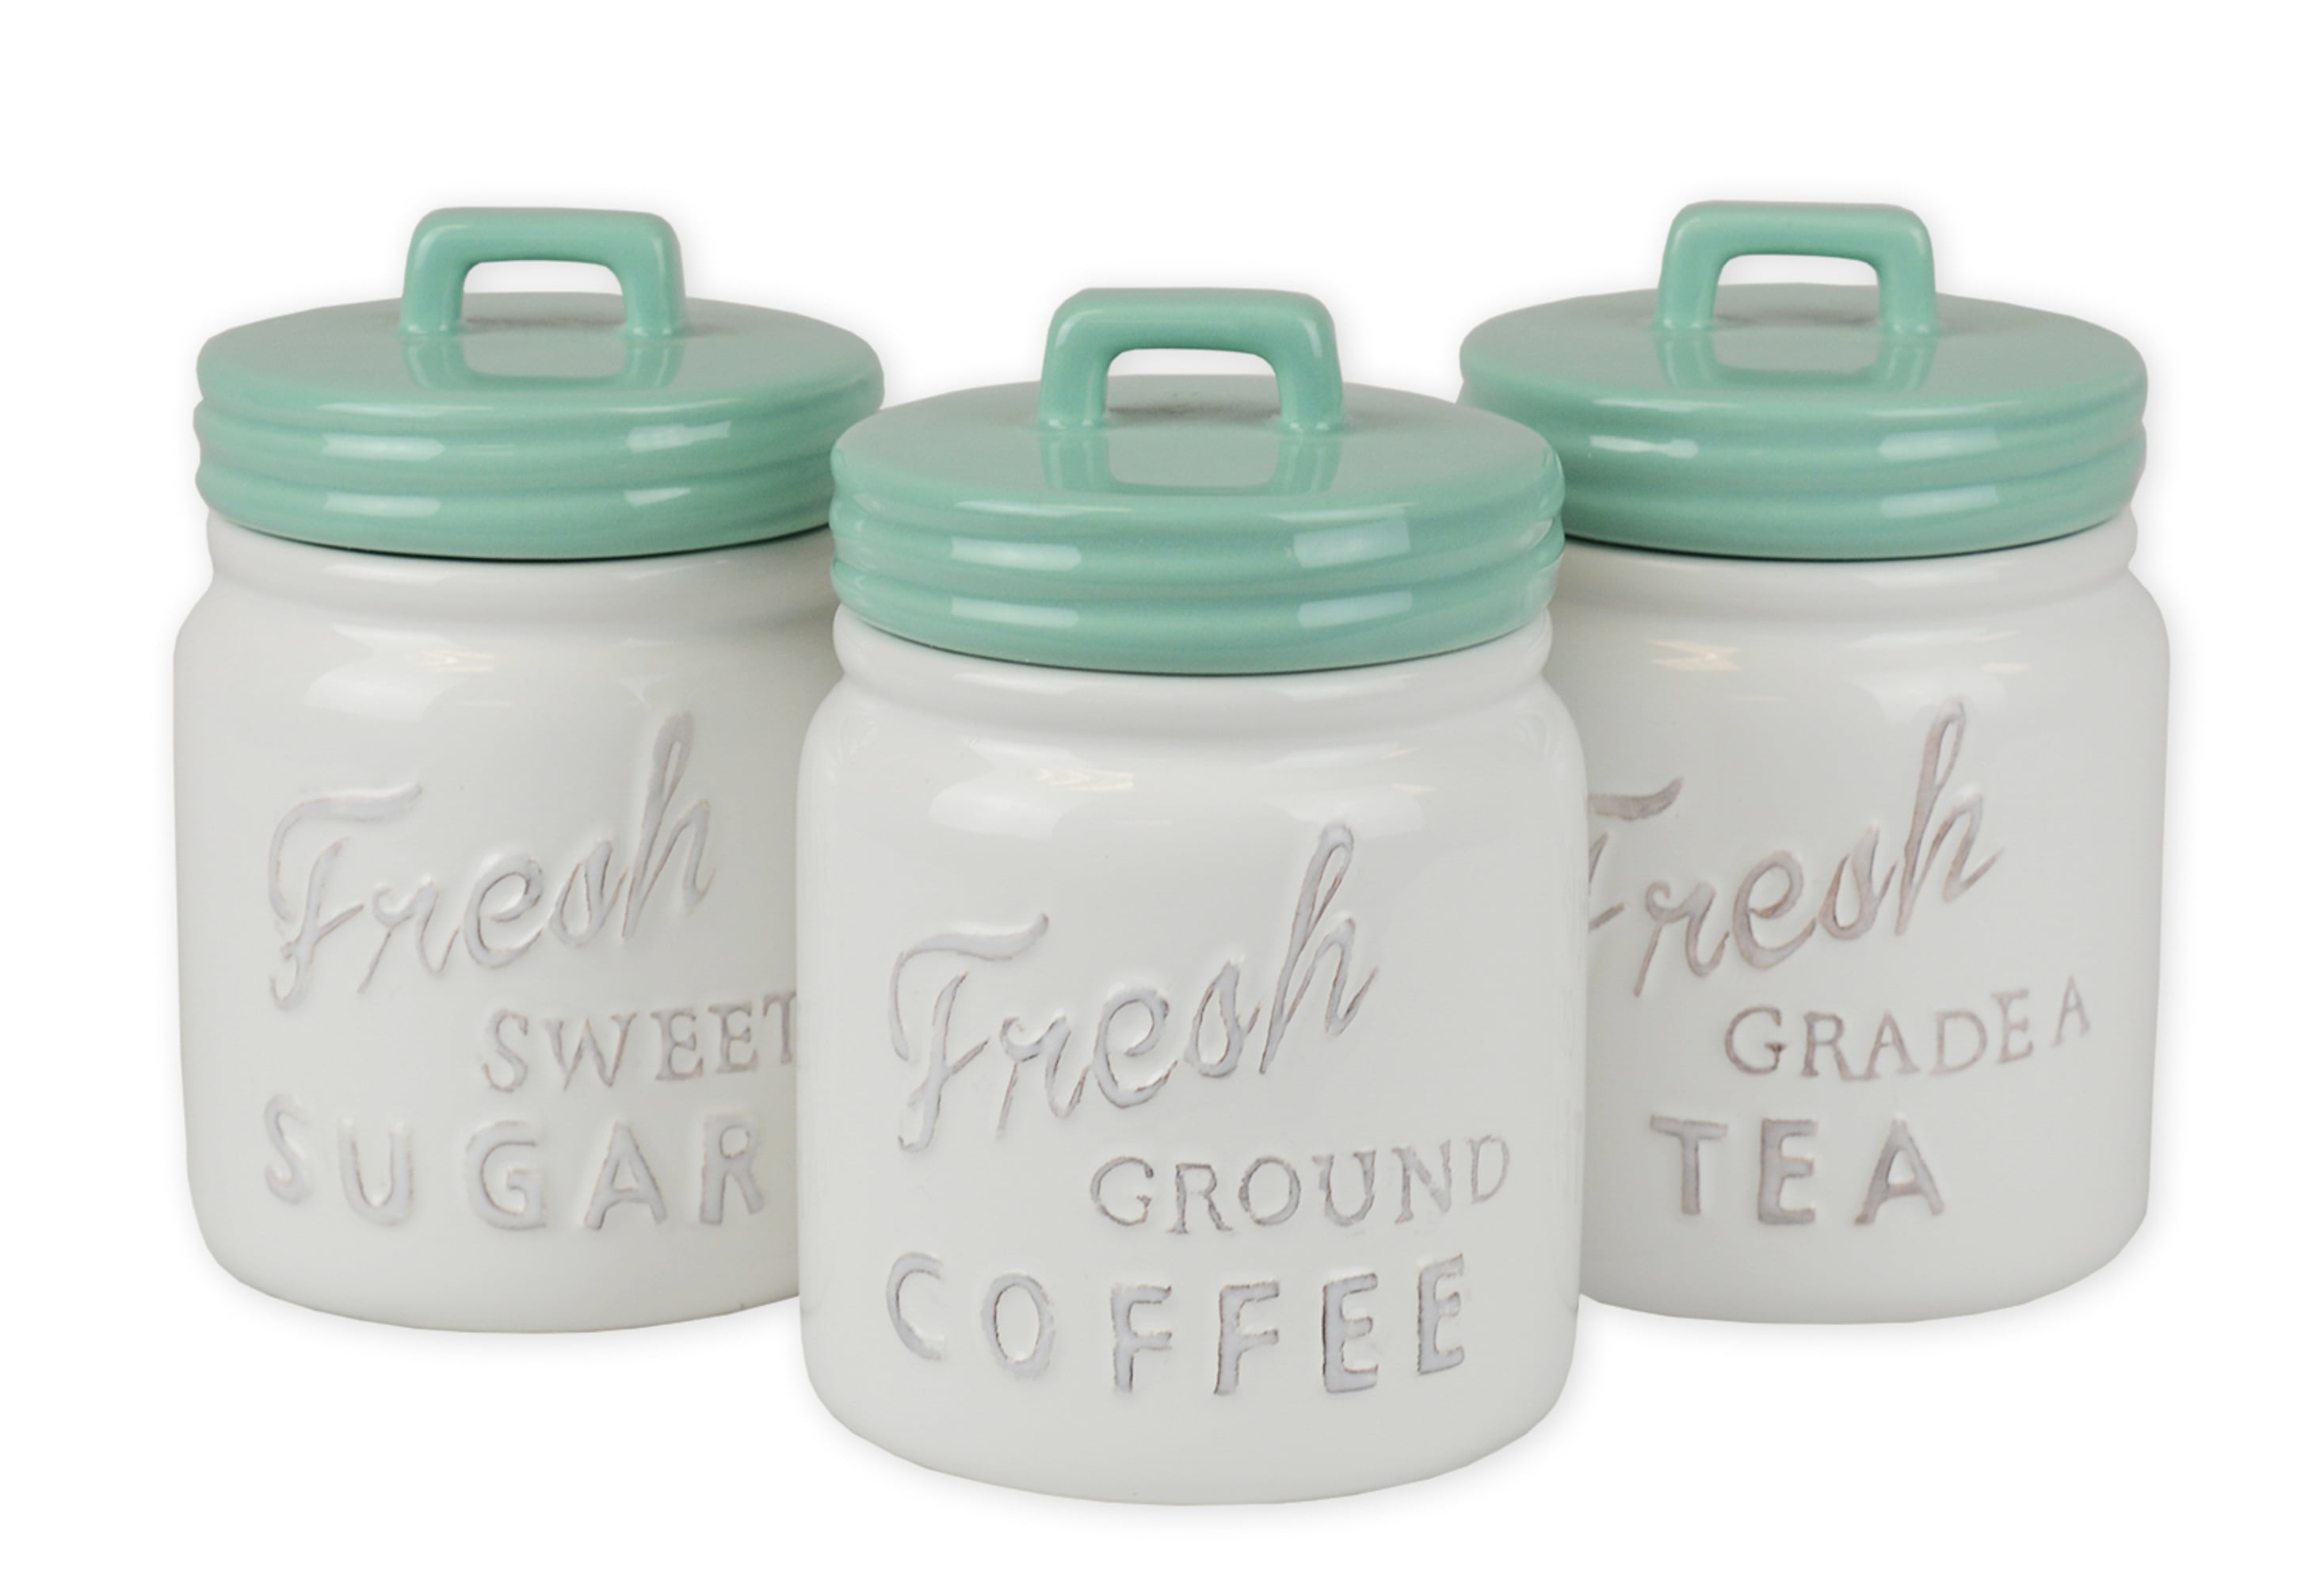 3 PCs Ceramic Canister Set Tea Coffee Sugar Cookie Jar Kitchen Storage Container